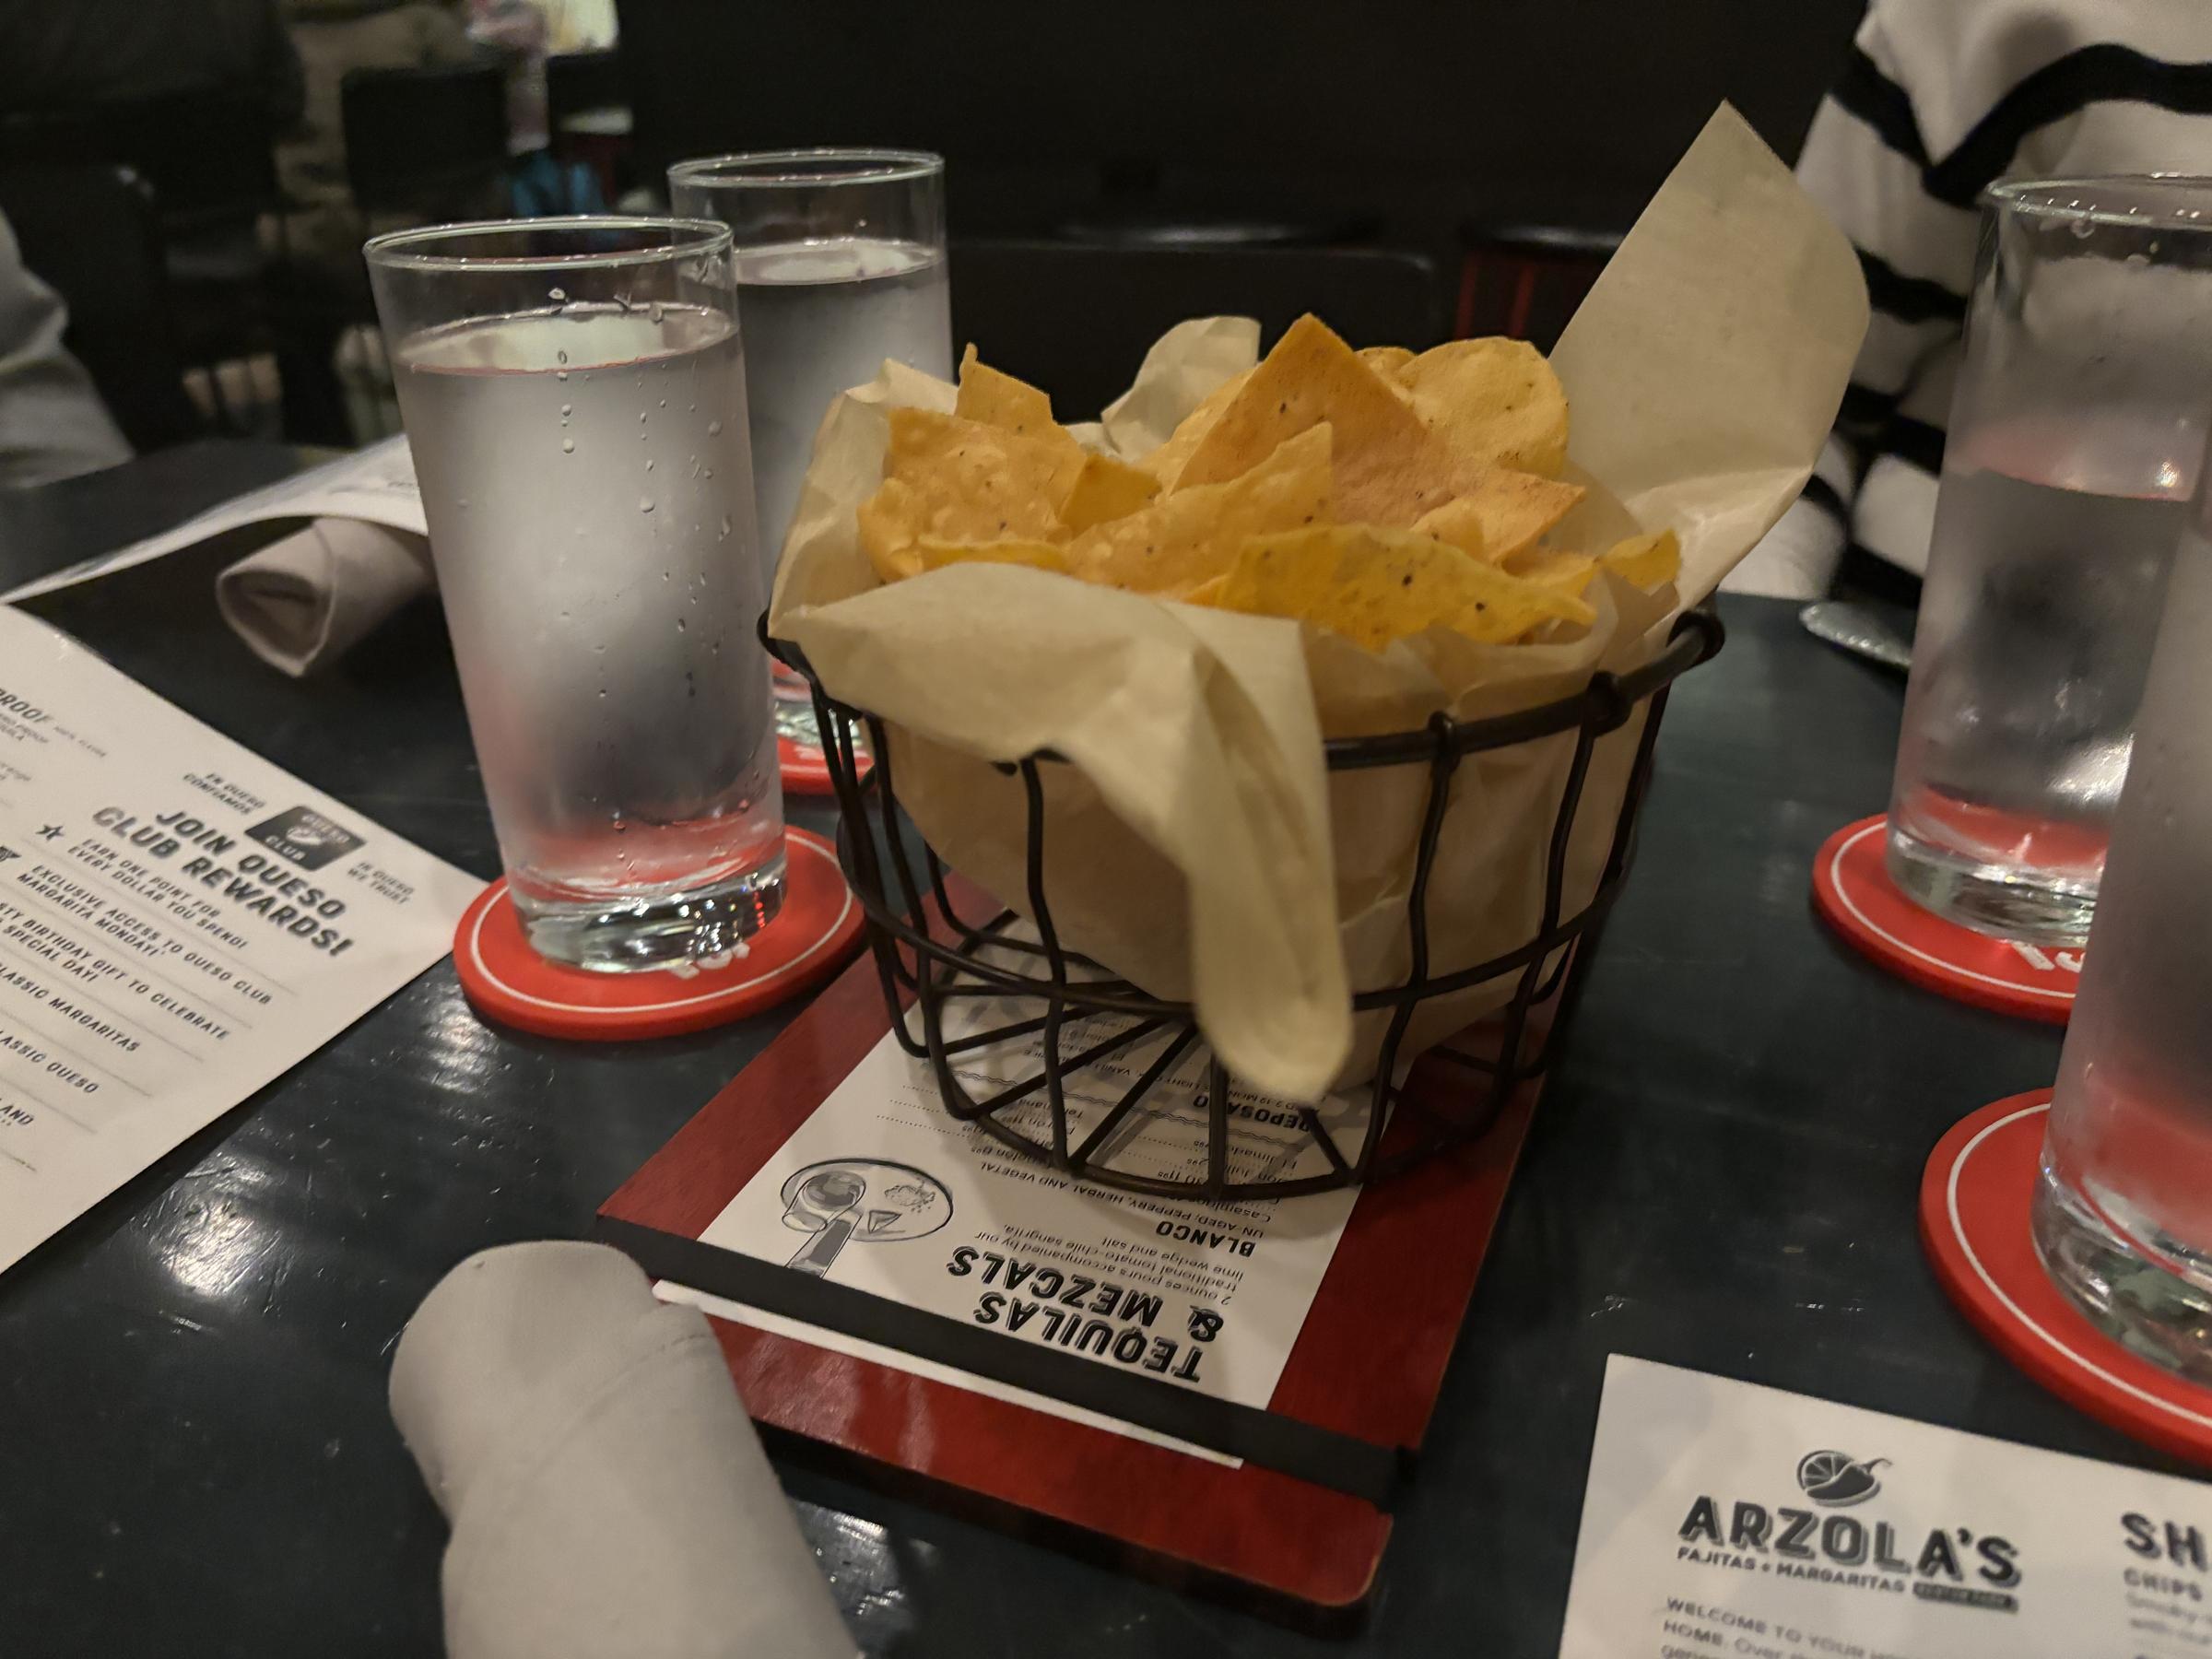 Arzolas Fajitas + Margaritas chips